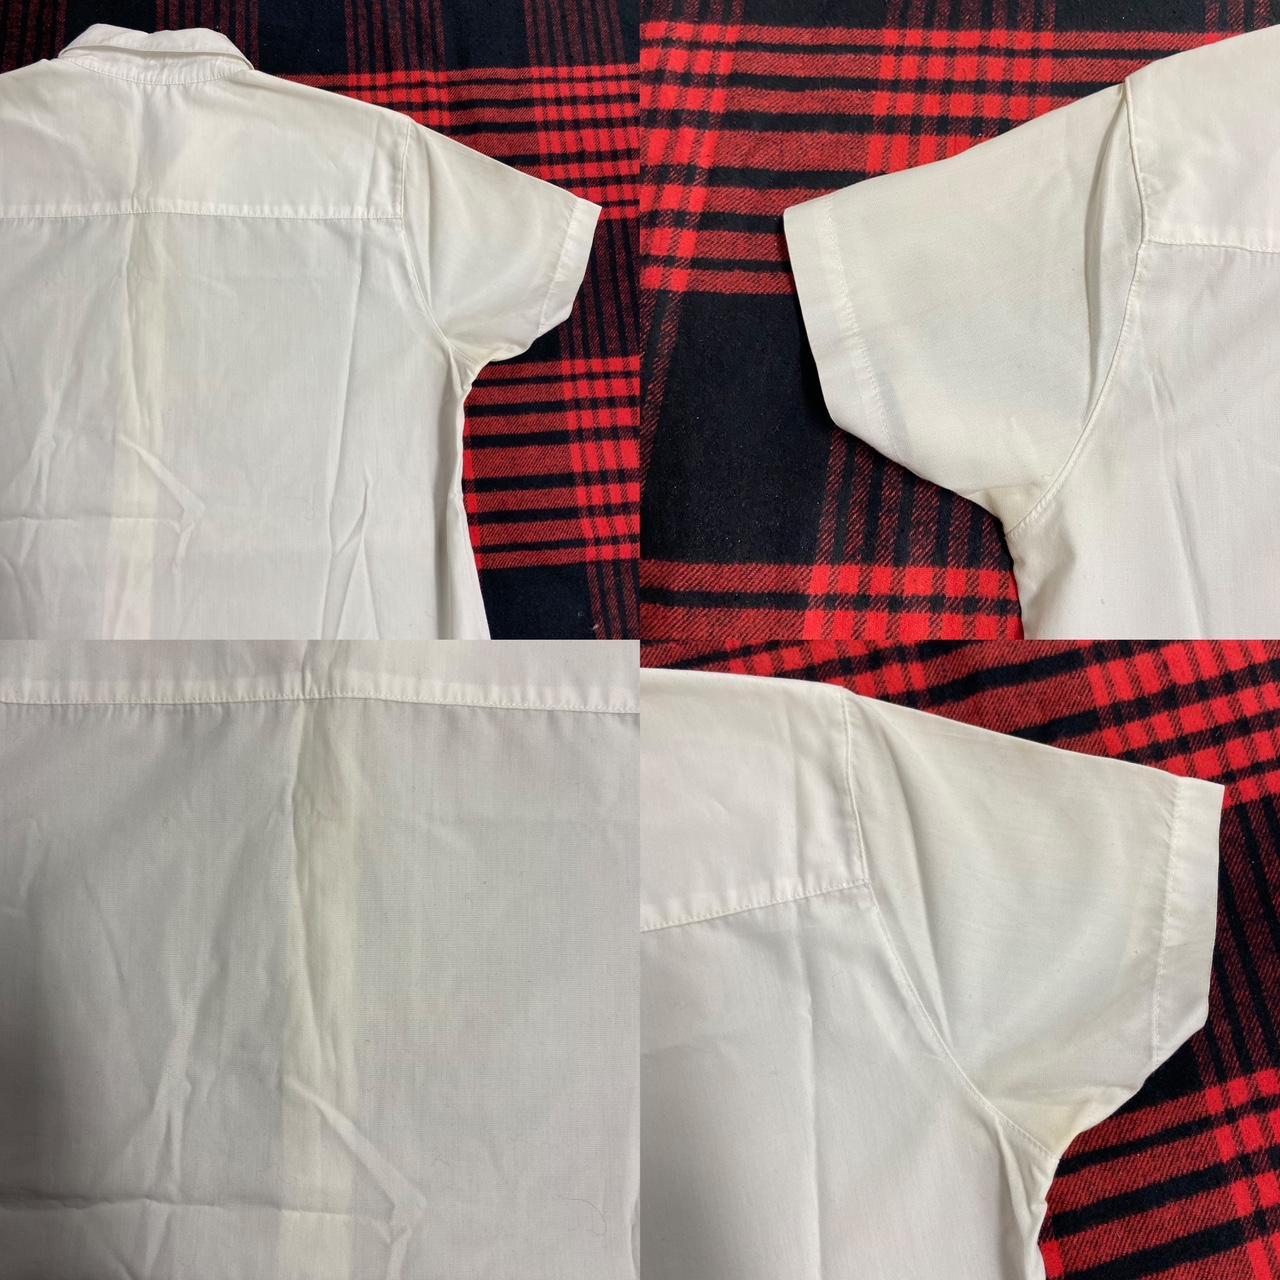 American Apparel Women's White and Black Shirt (8)